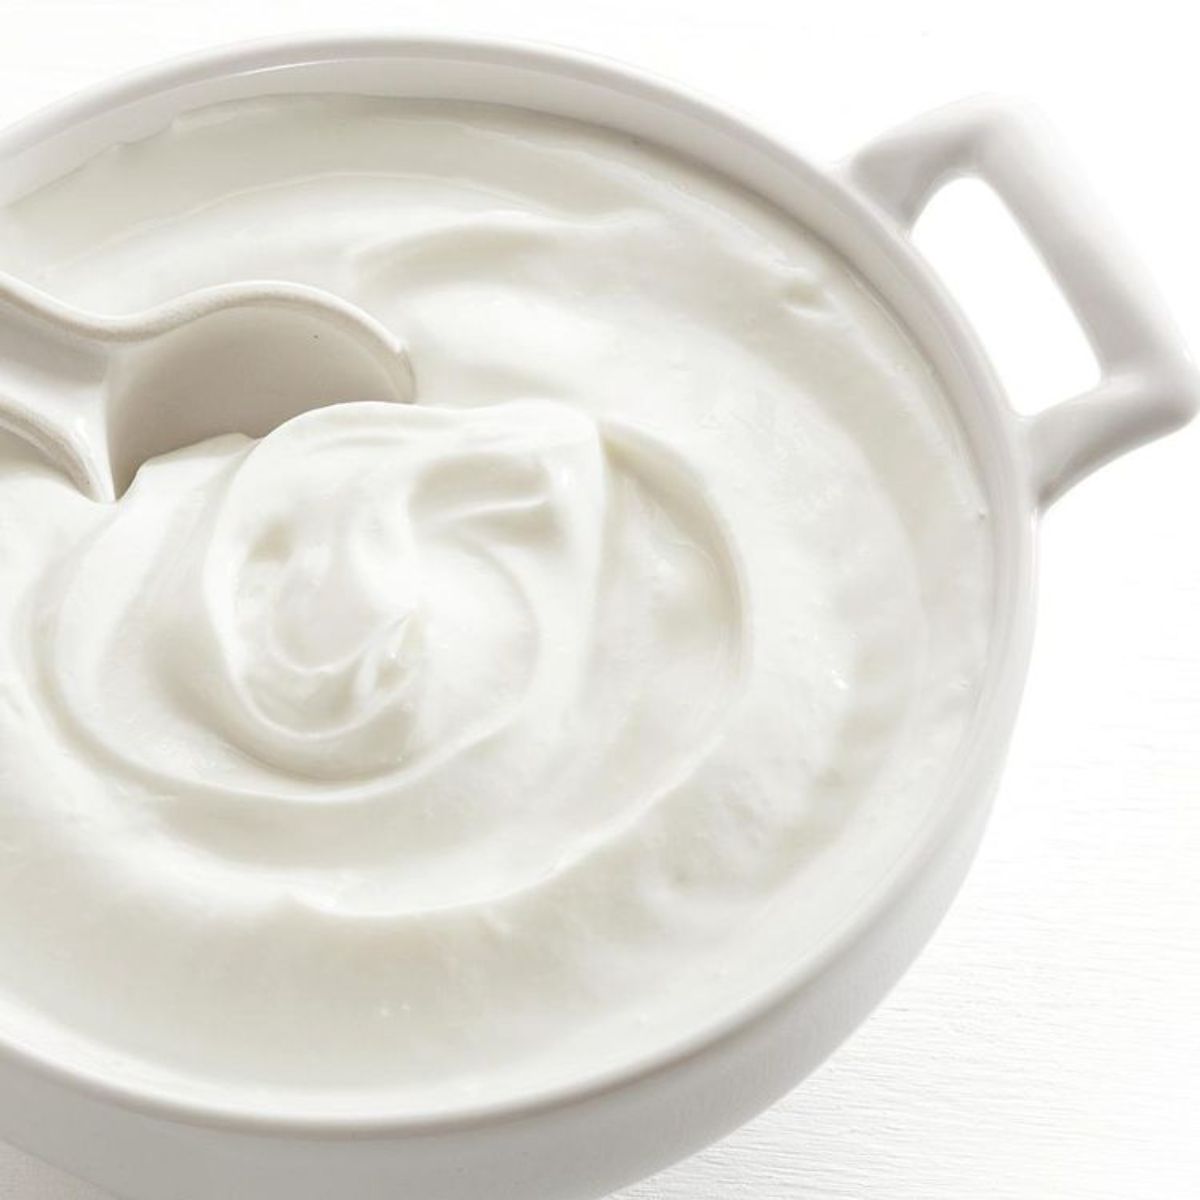 Creamy homemade plain greek yogurt in a white bowl.